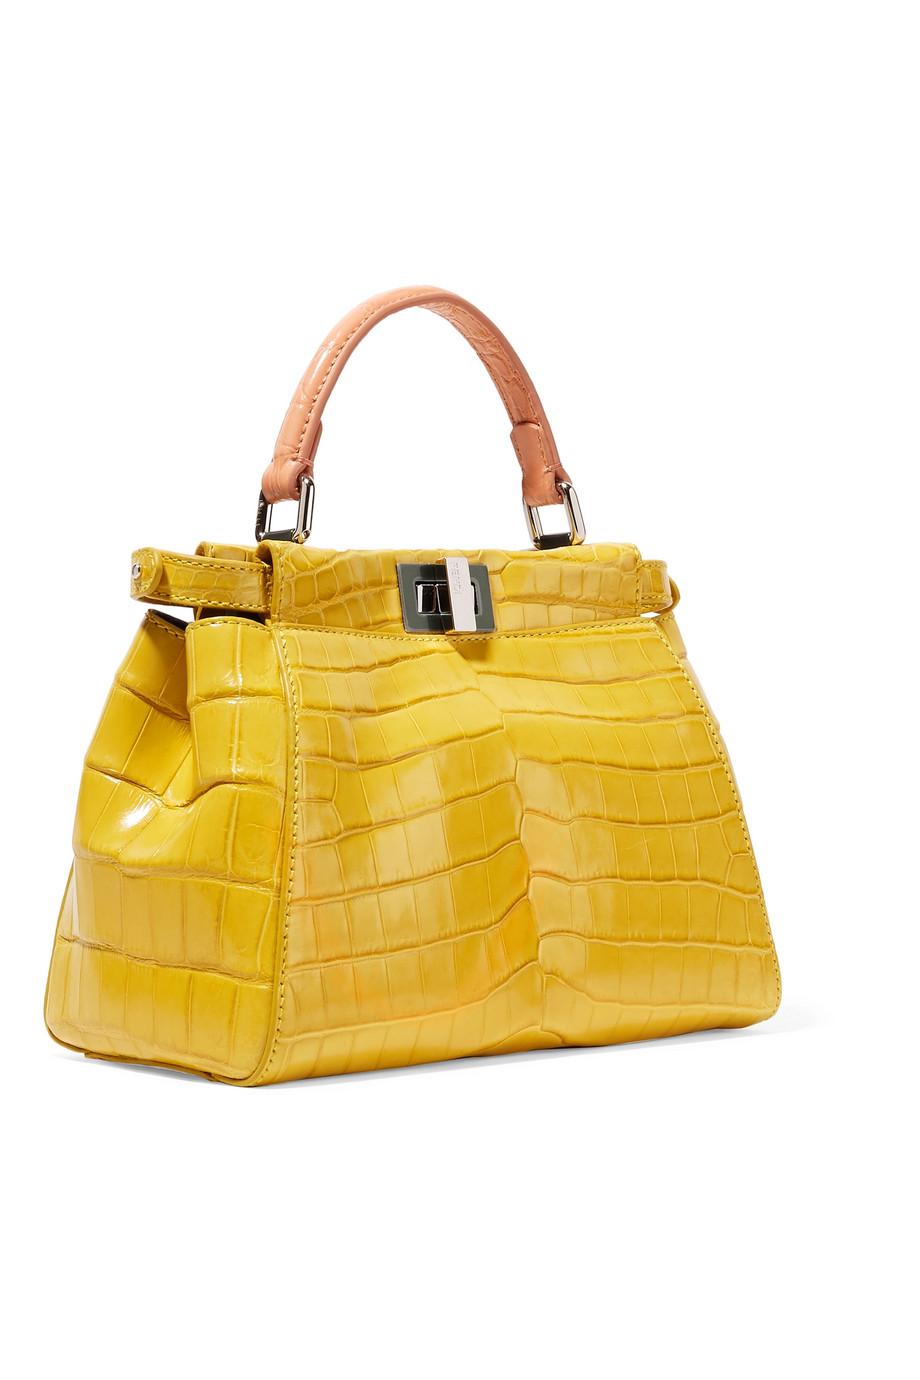 Fendi Peekaboo Mini Crocodile Shoulder Bag in Yellow